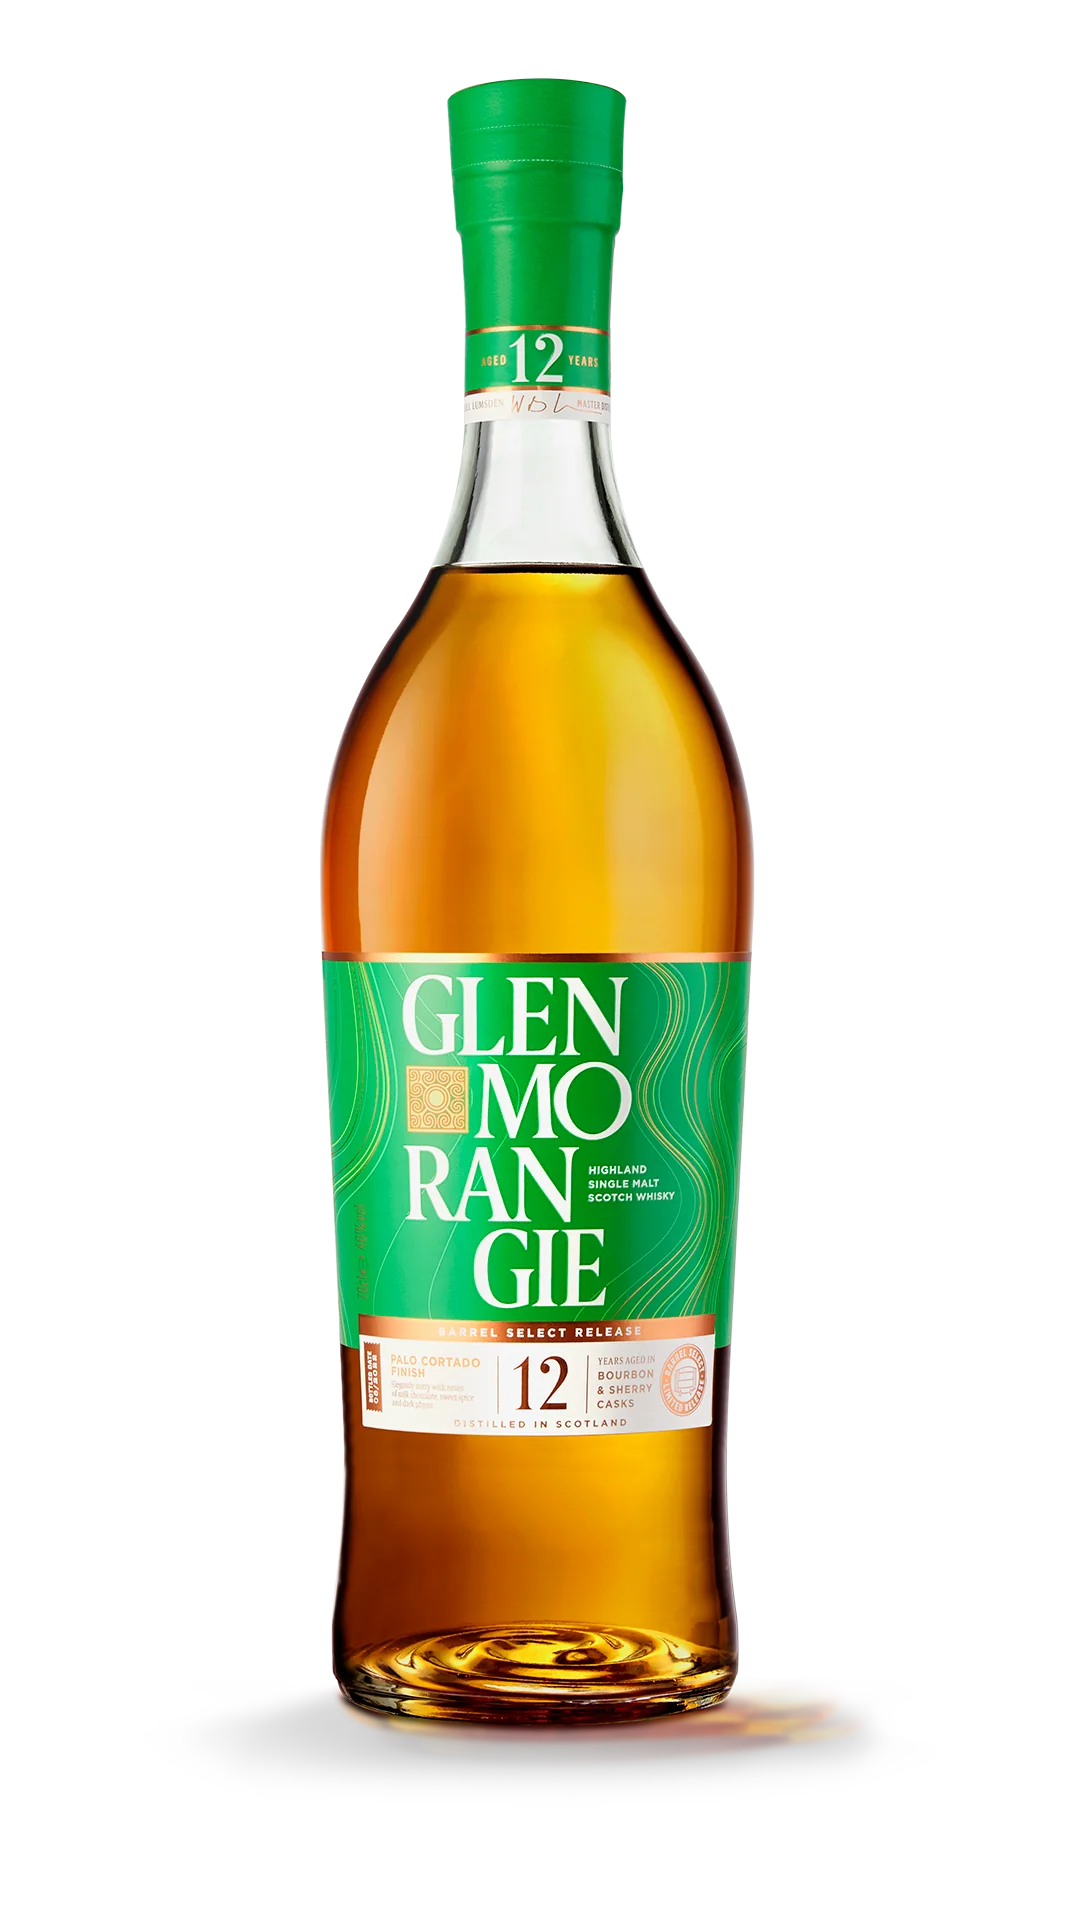 Glenmorangie Palo Cortado Finish - szkocka whisky single malt z regionu Highlands, butelka 700 ml.